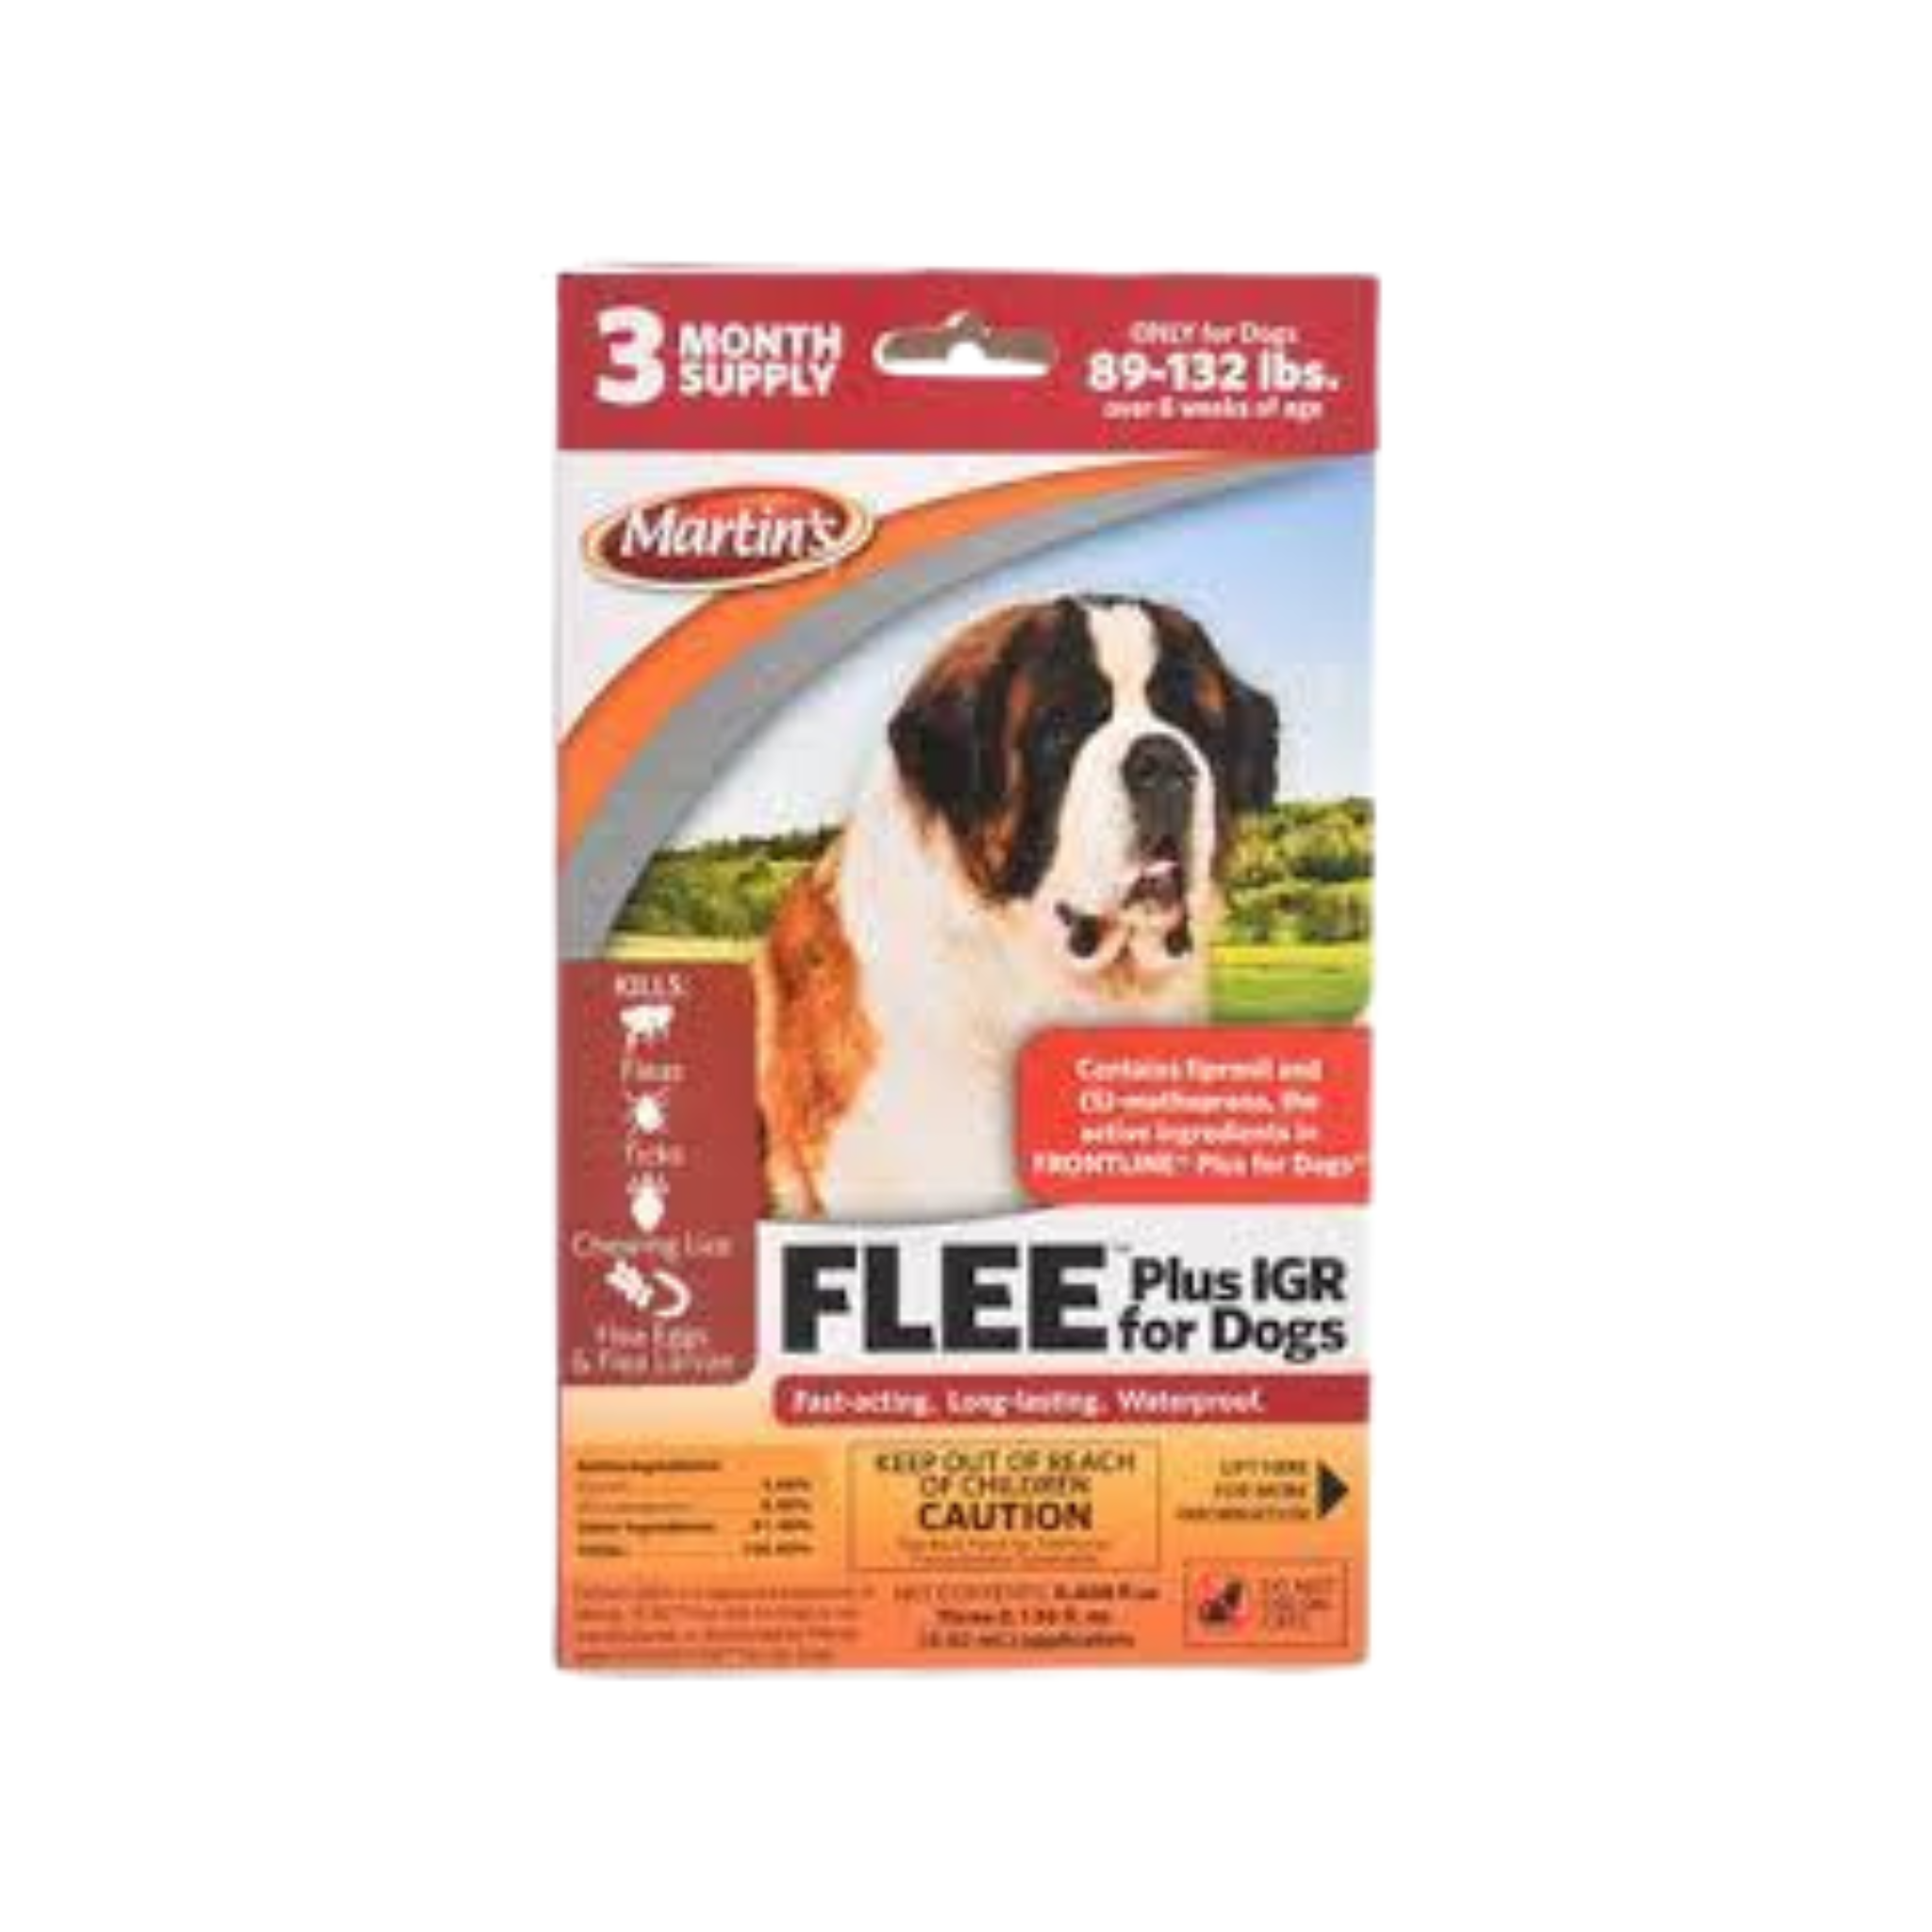 Martin's FLEE Plus IGR for Dogs 89-132lbs.